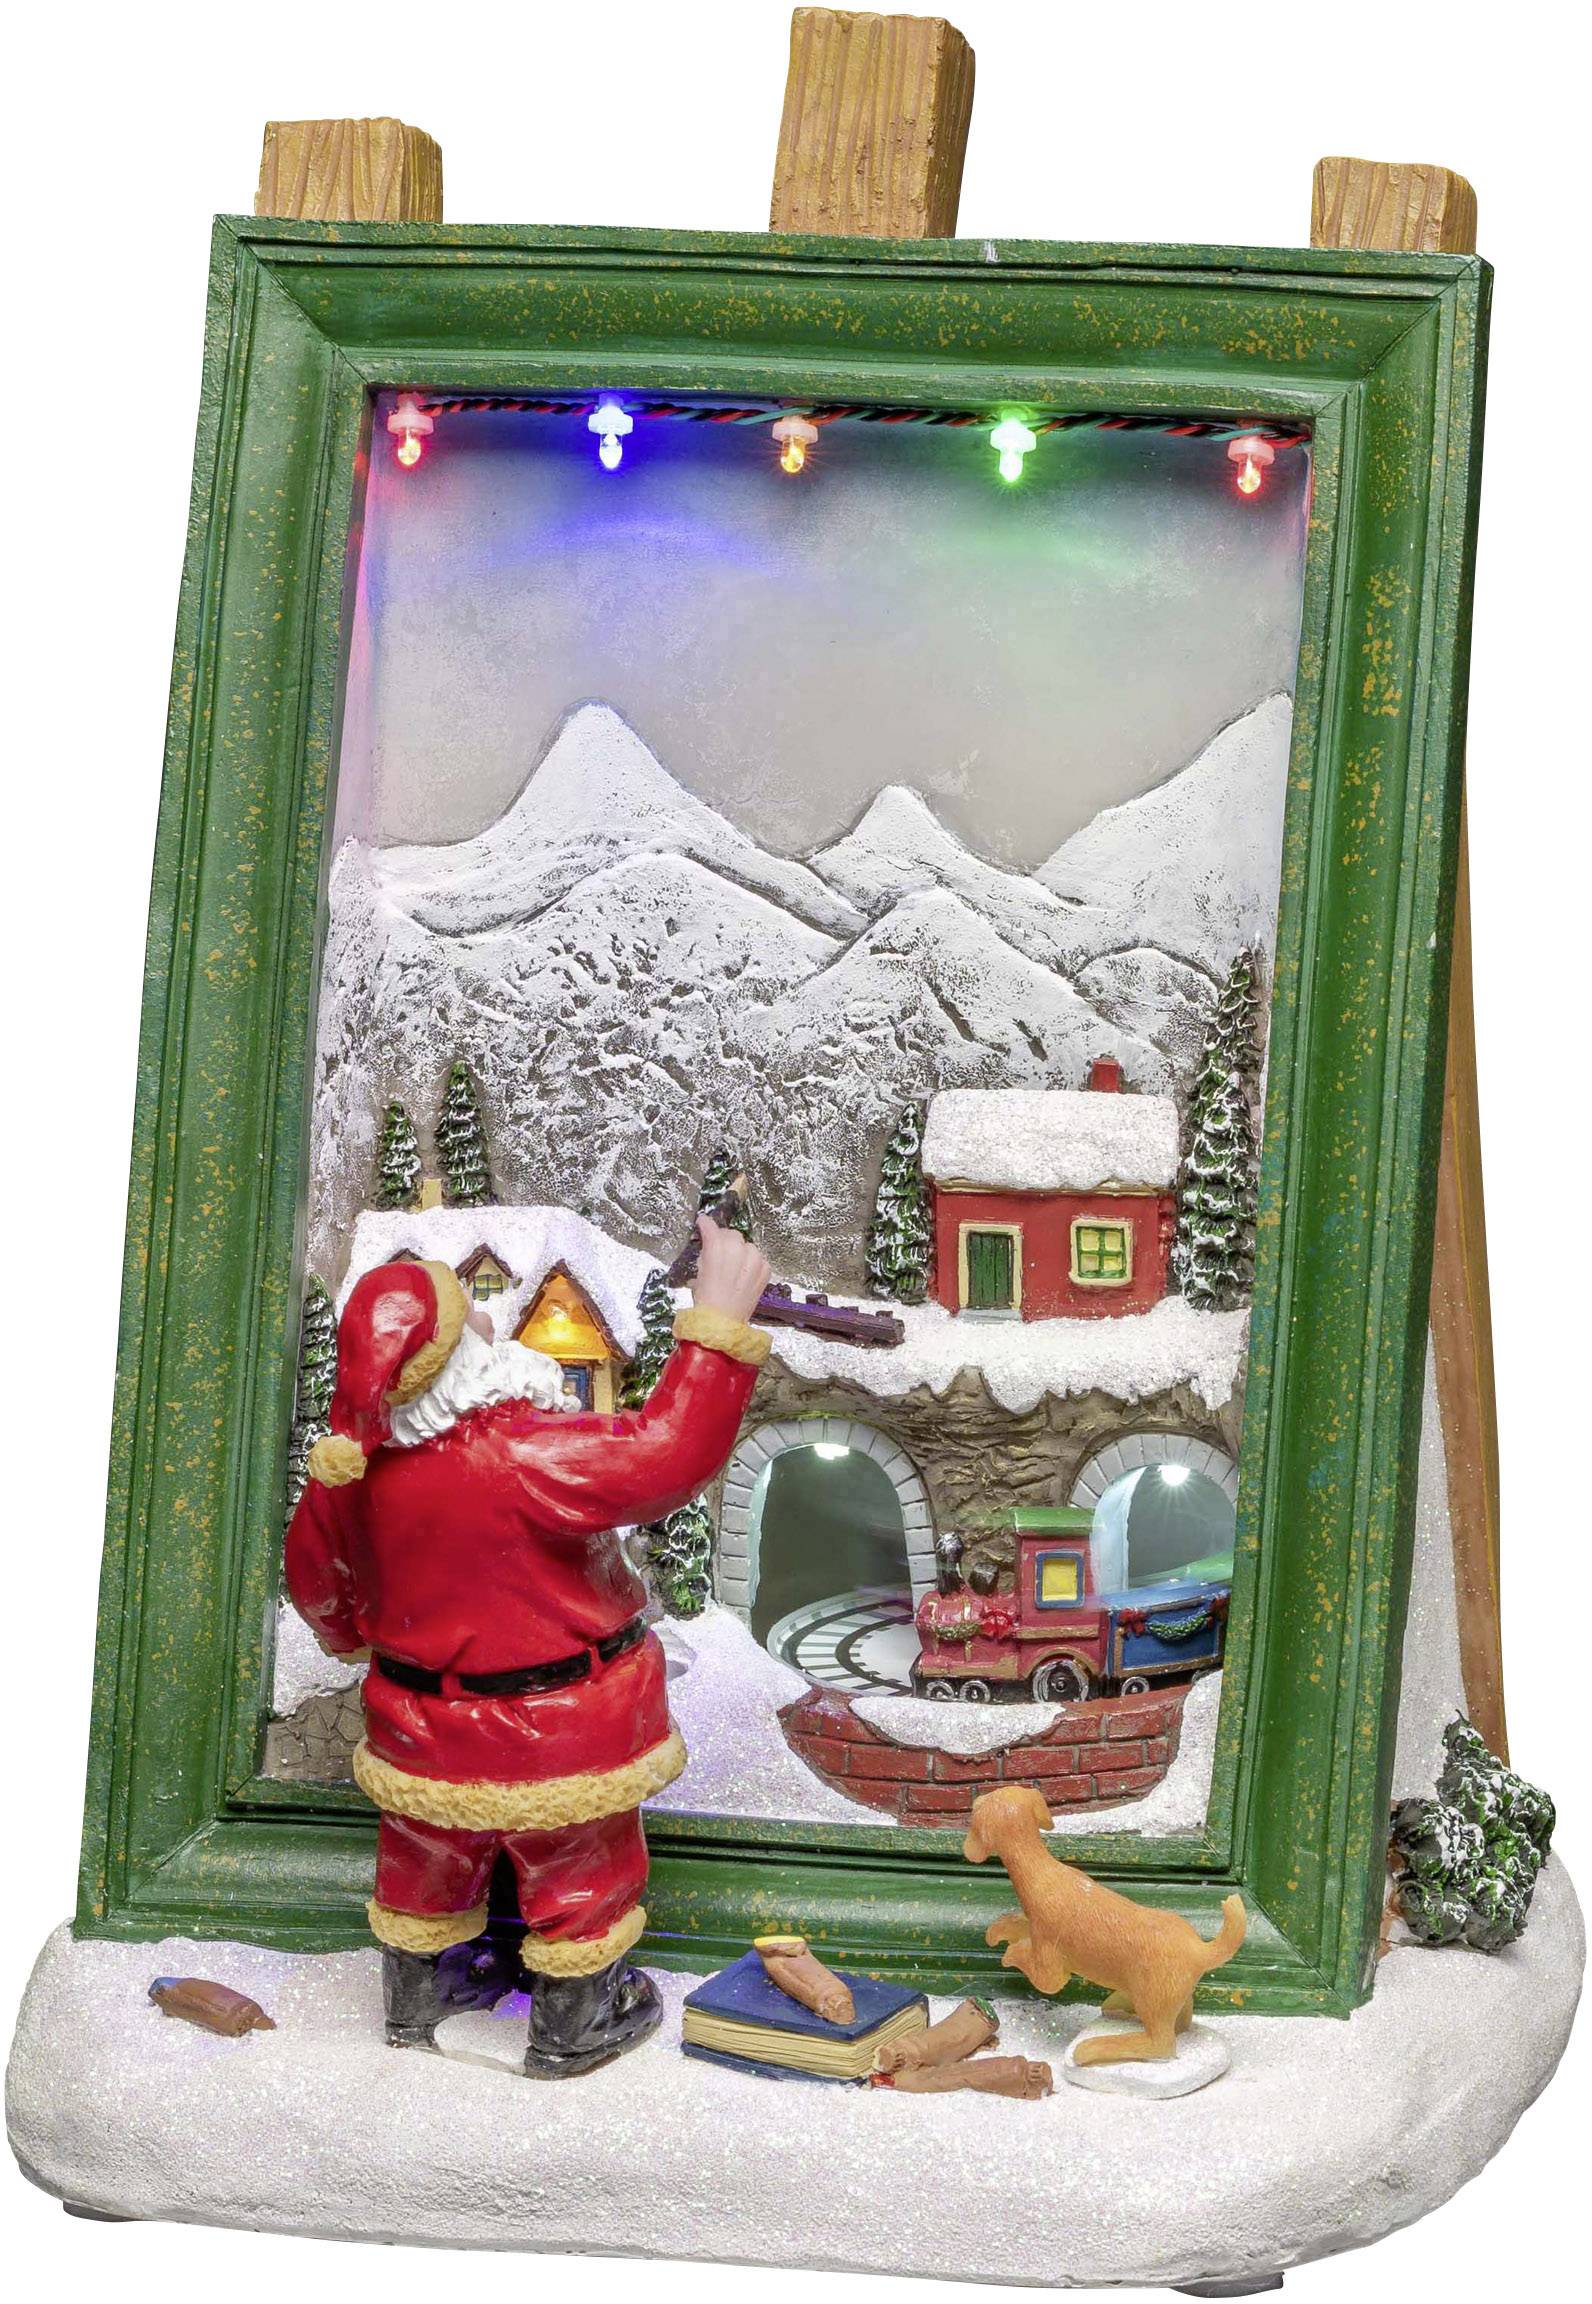 KONSTSMIDE 4221-000 Malender Weihnachtsmann RGBW LED Bunt